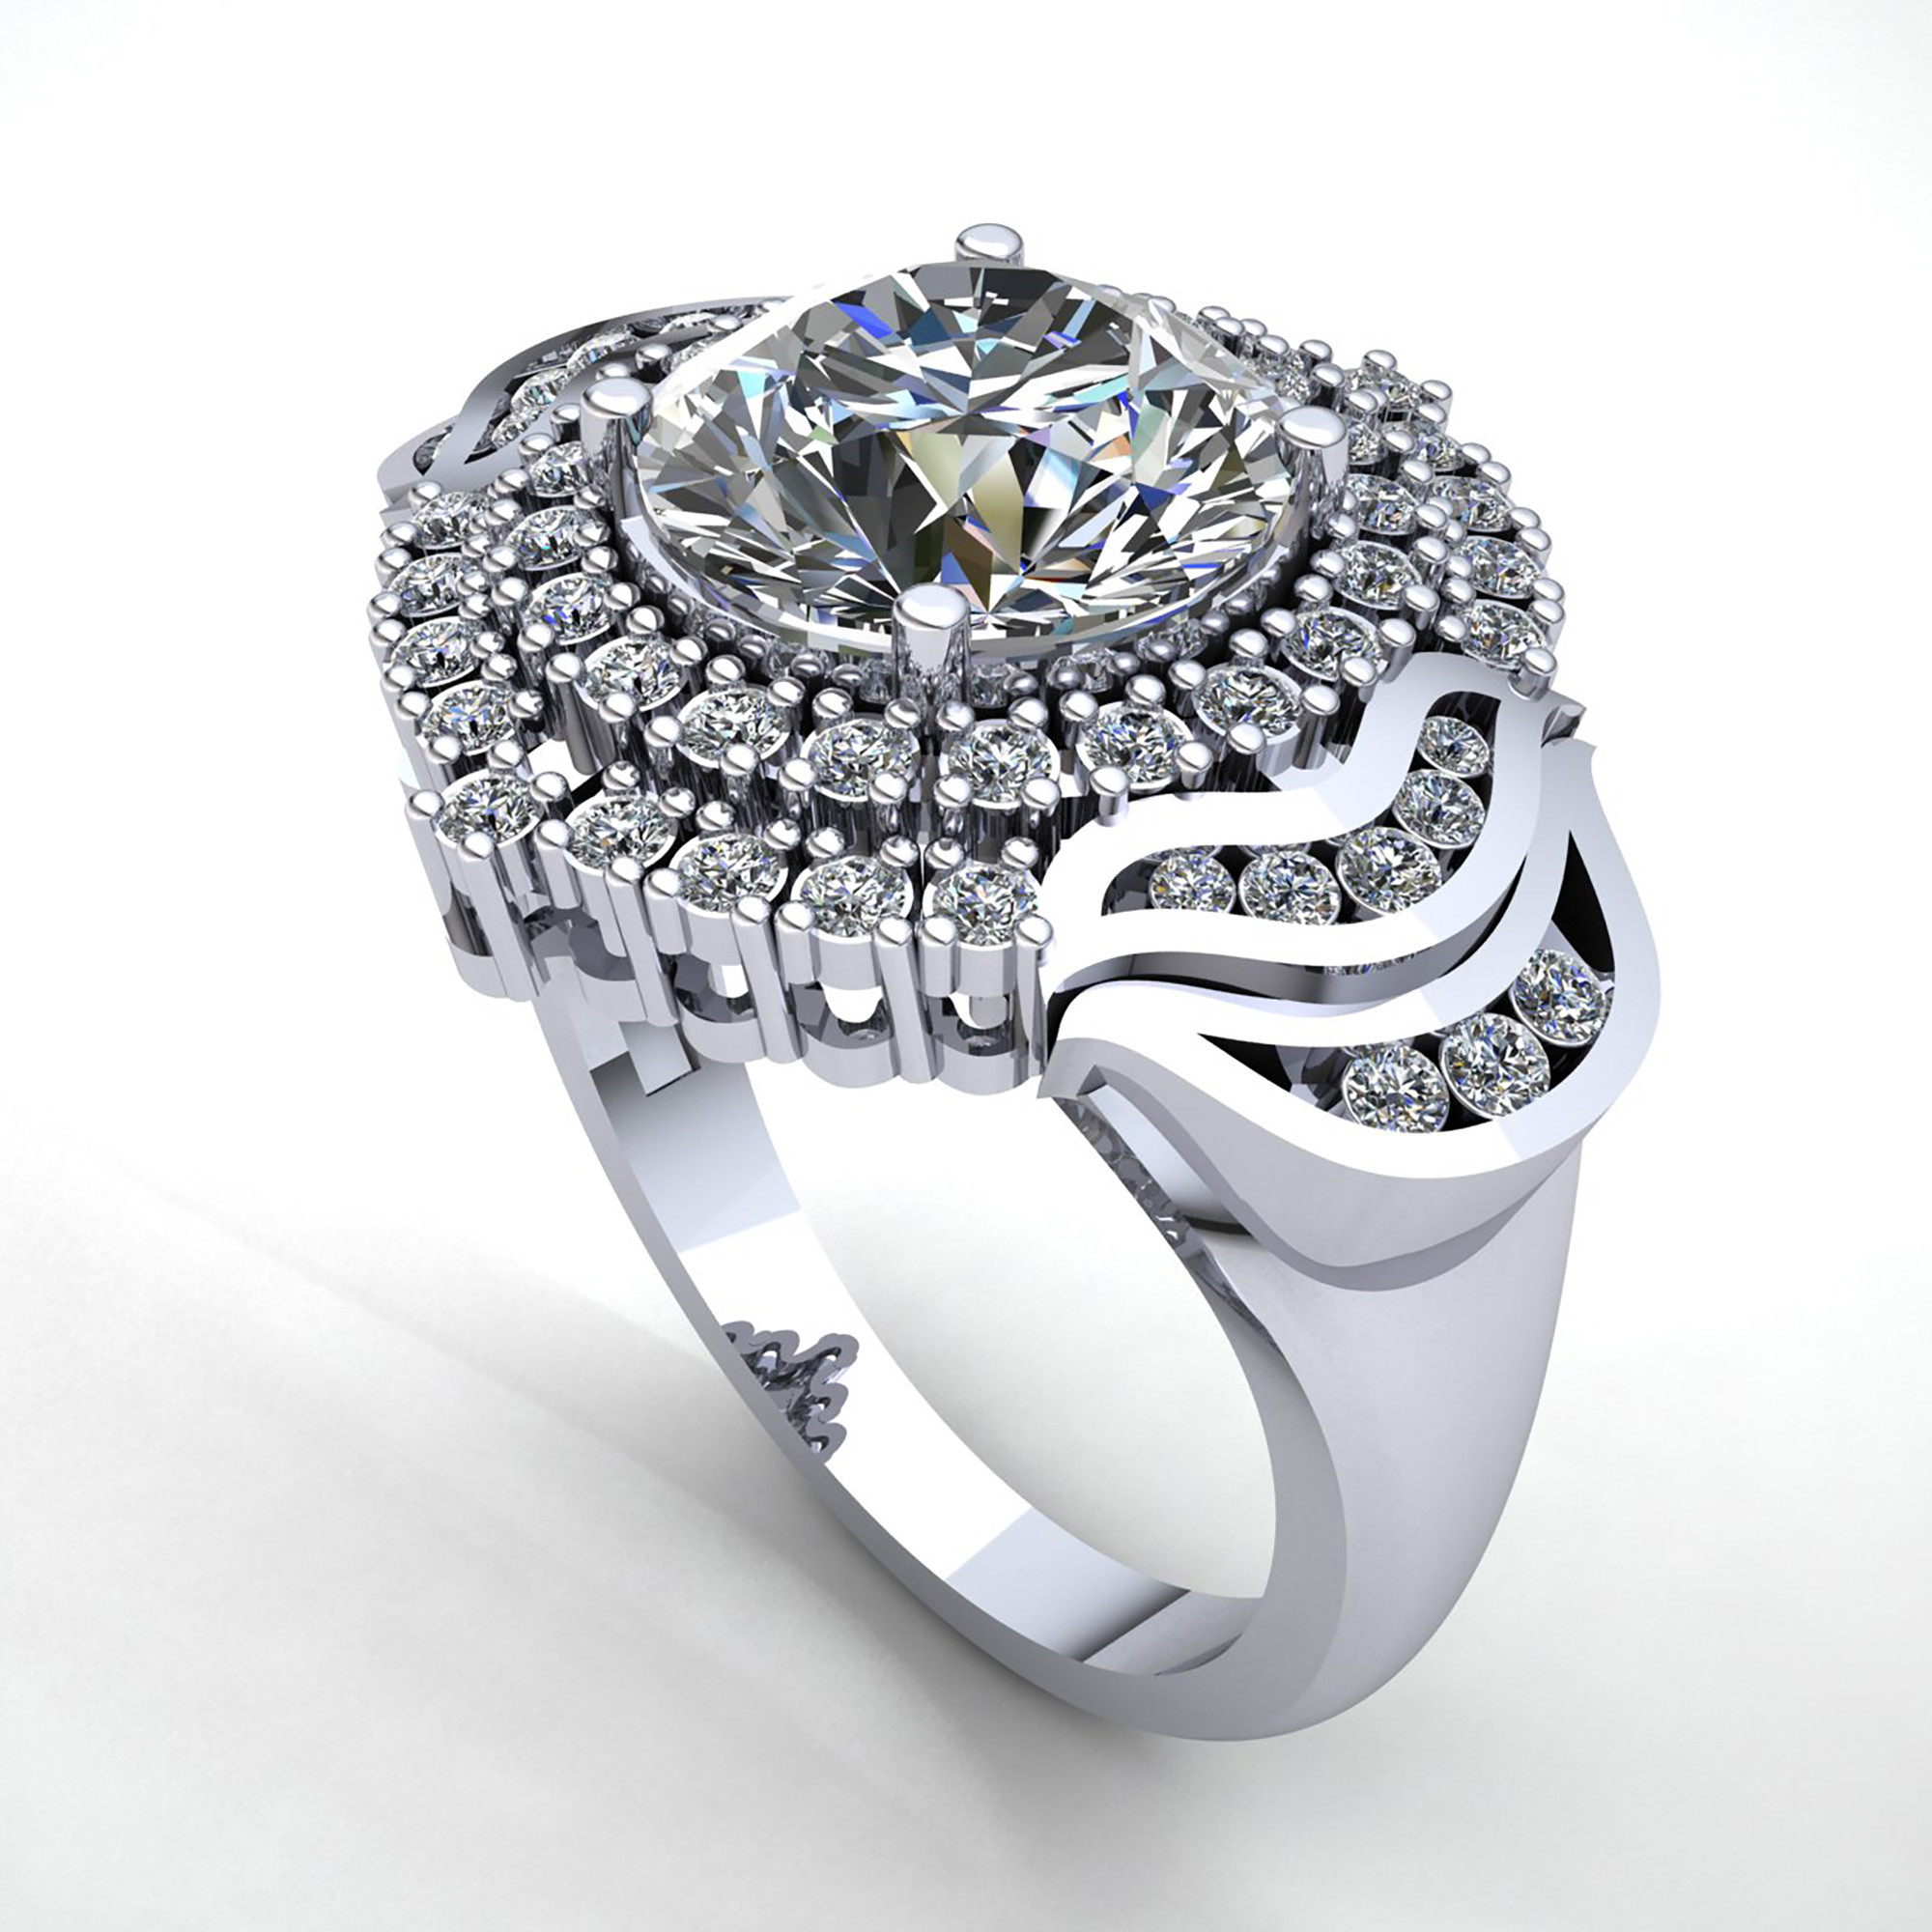 5ct Diamond Engagement Rings
 5ct Round Diamond La s Bridal Solitaire Engagement Ring